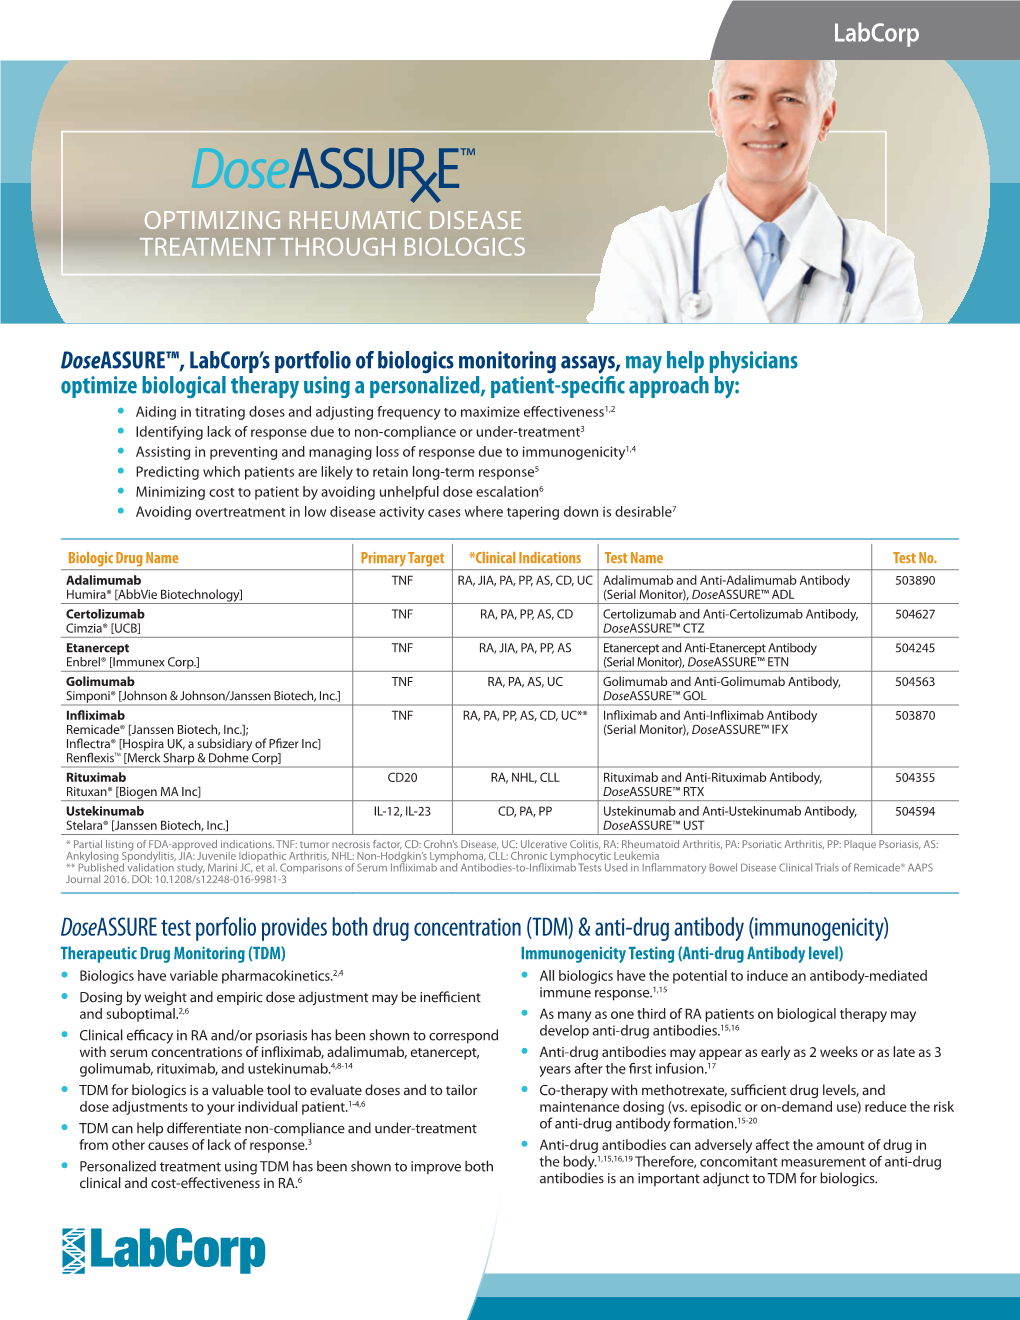 Labcorp Doseassure Test Porfolio Provides Both Drug Concentration